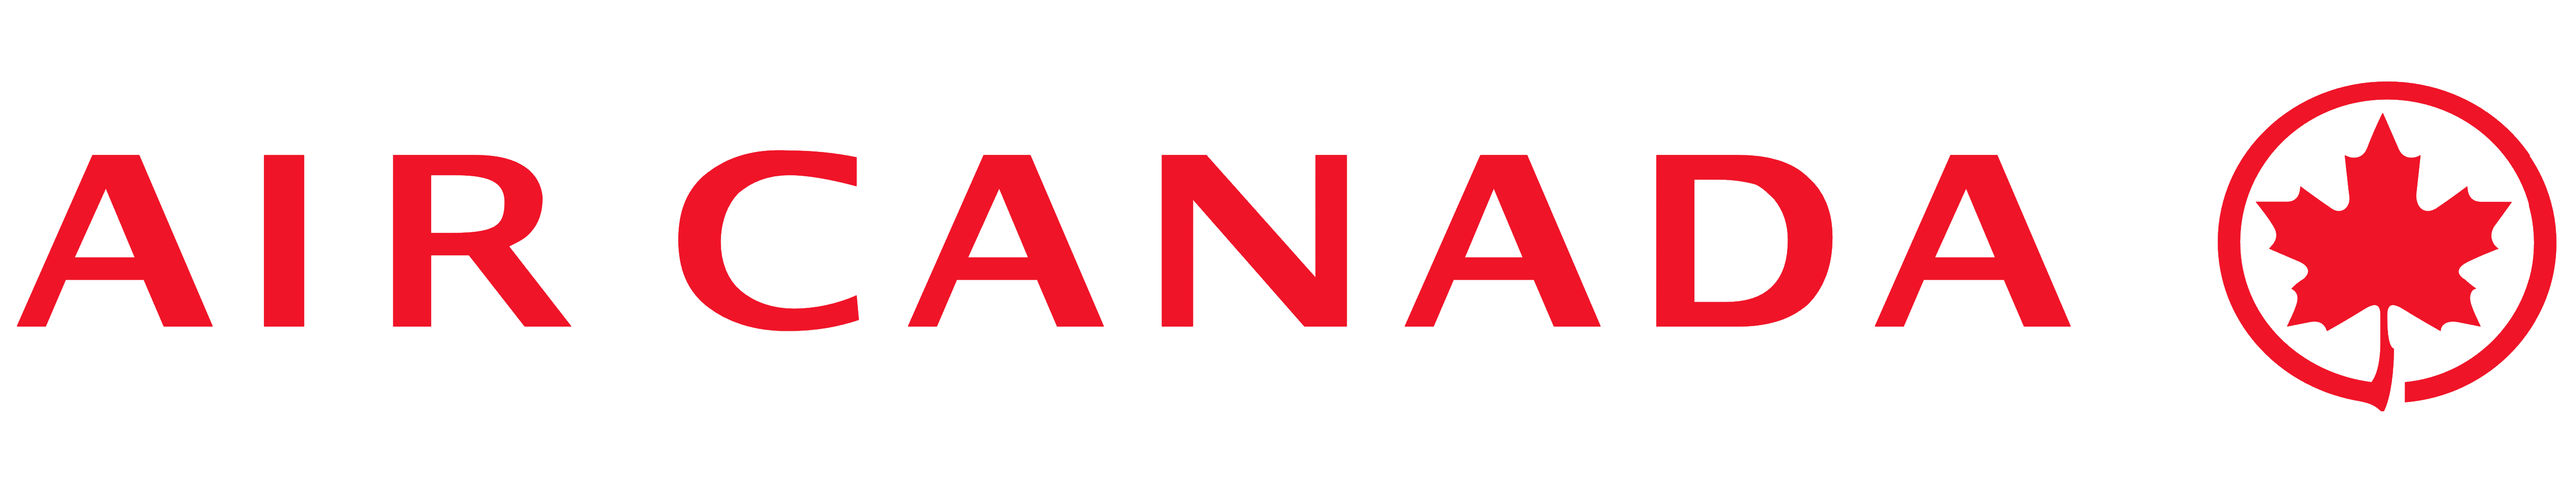 Air Canada logo, logotype